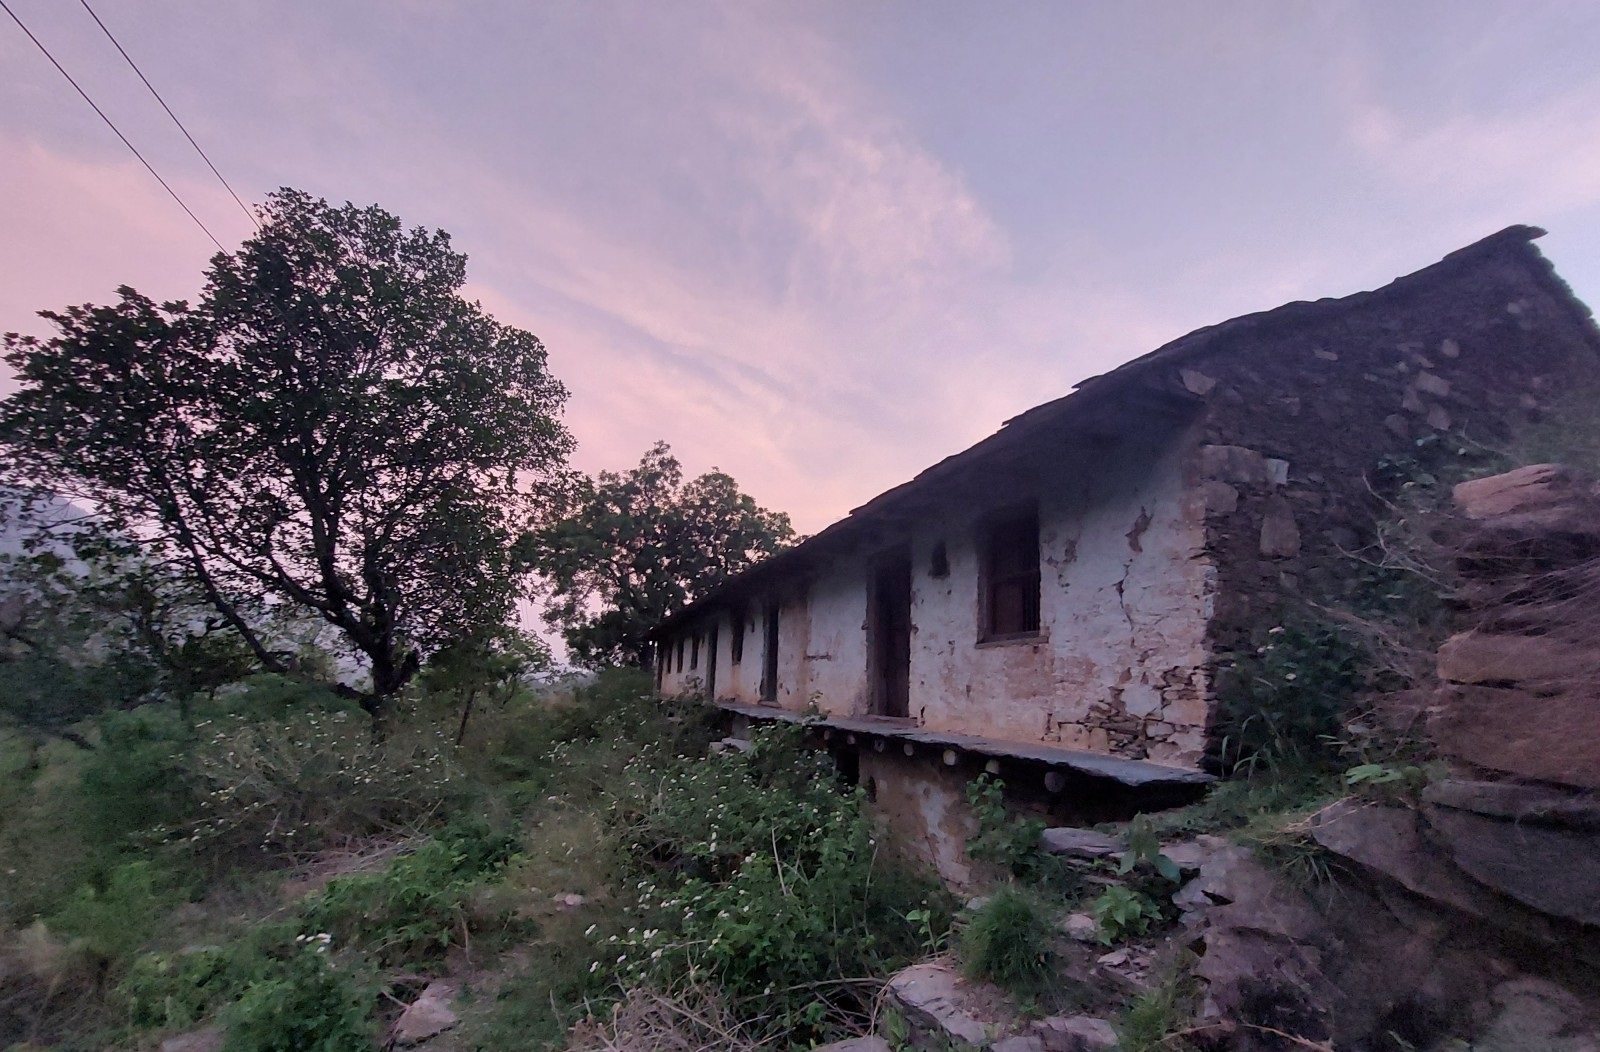 Umatha village, Pauri Garhwal